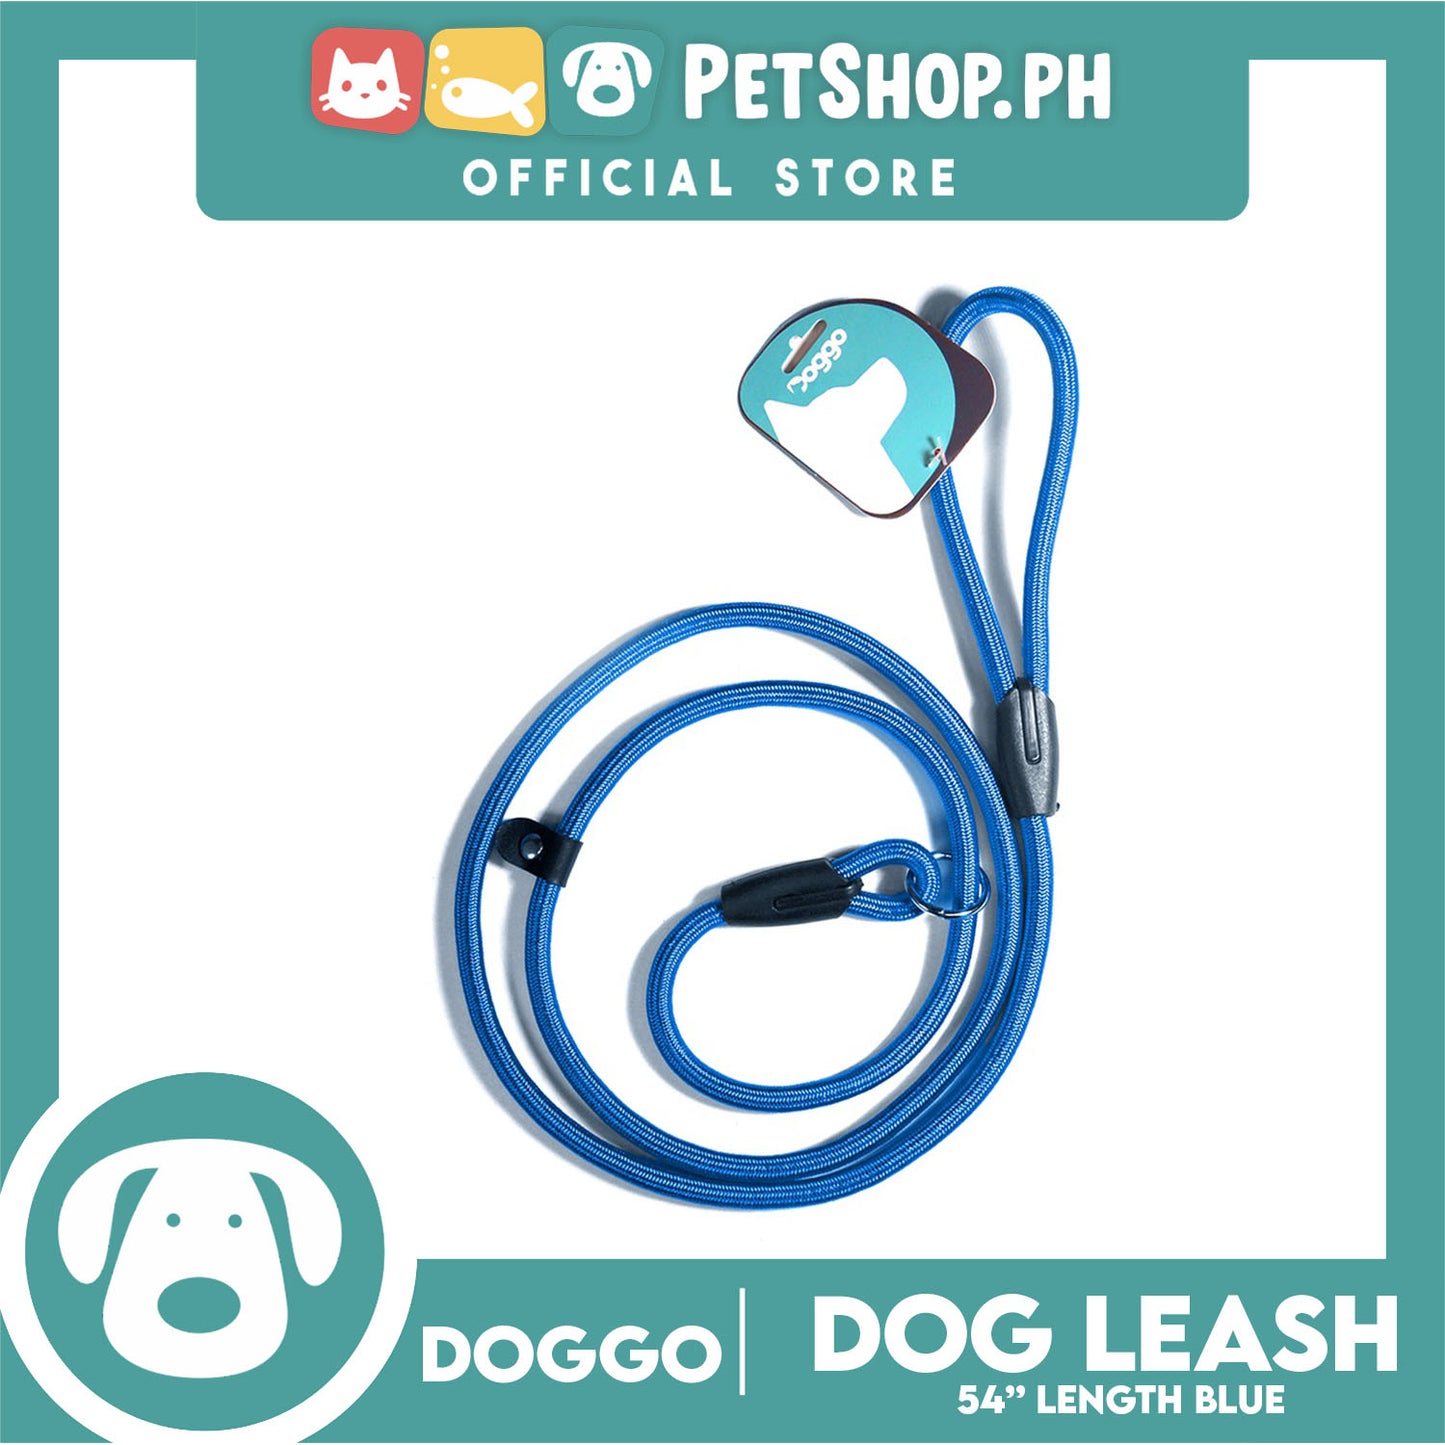 Doggo High Quality Dog Leash Adjustable (Blue) Leash for Your Dog